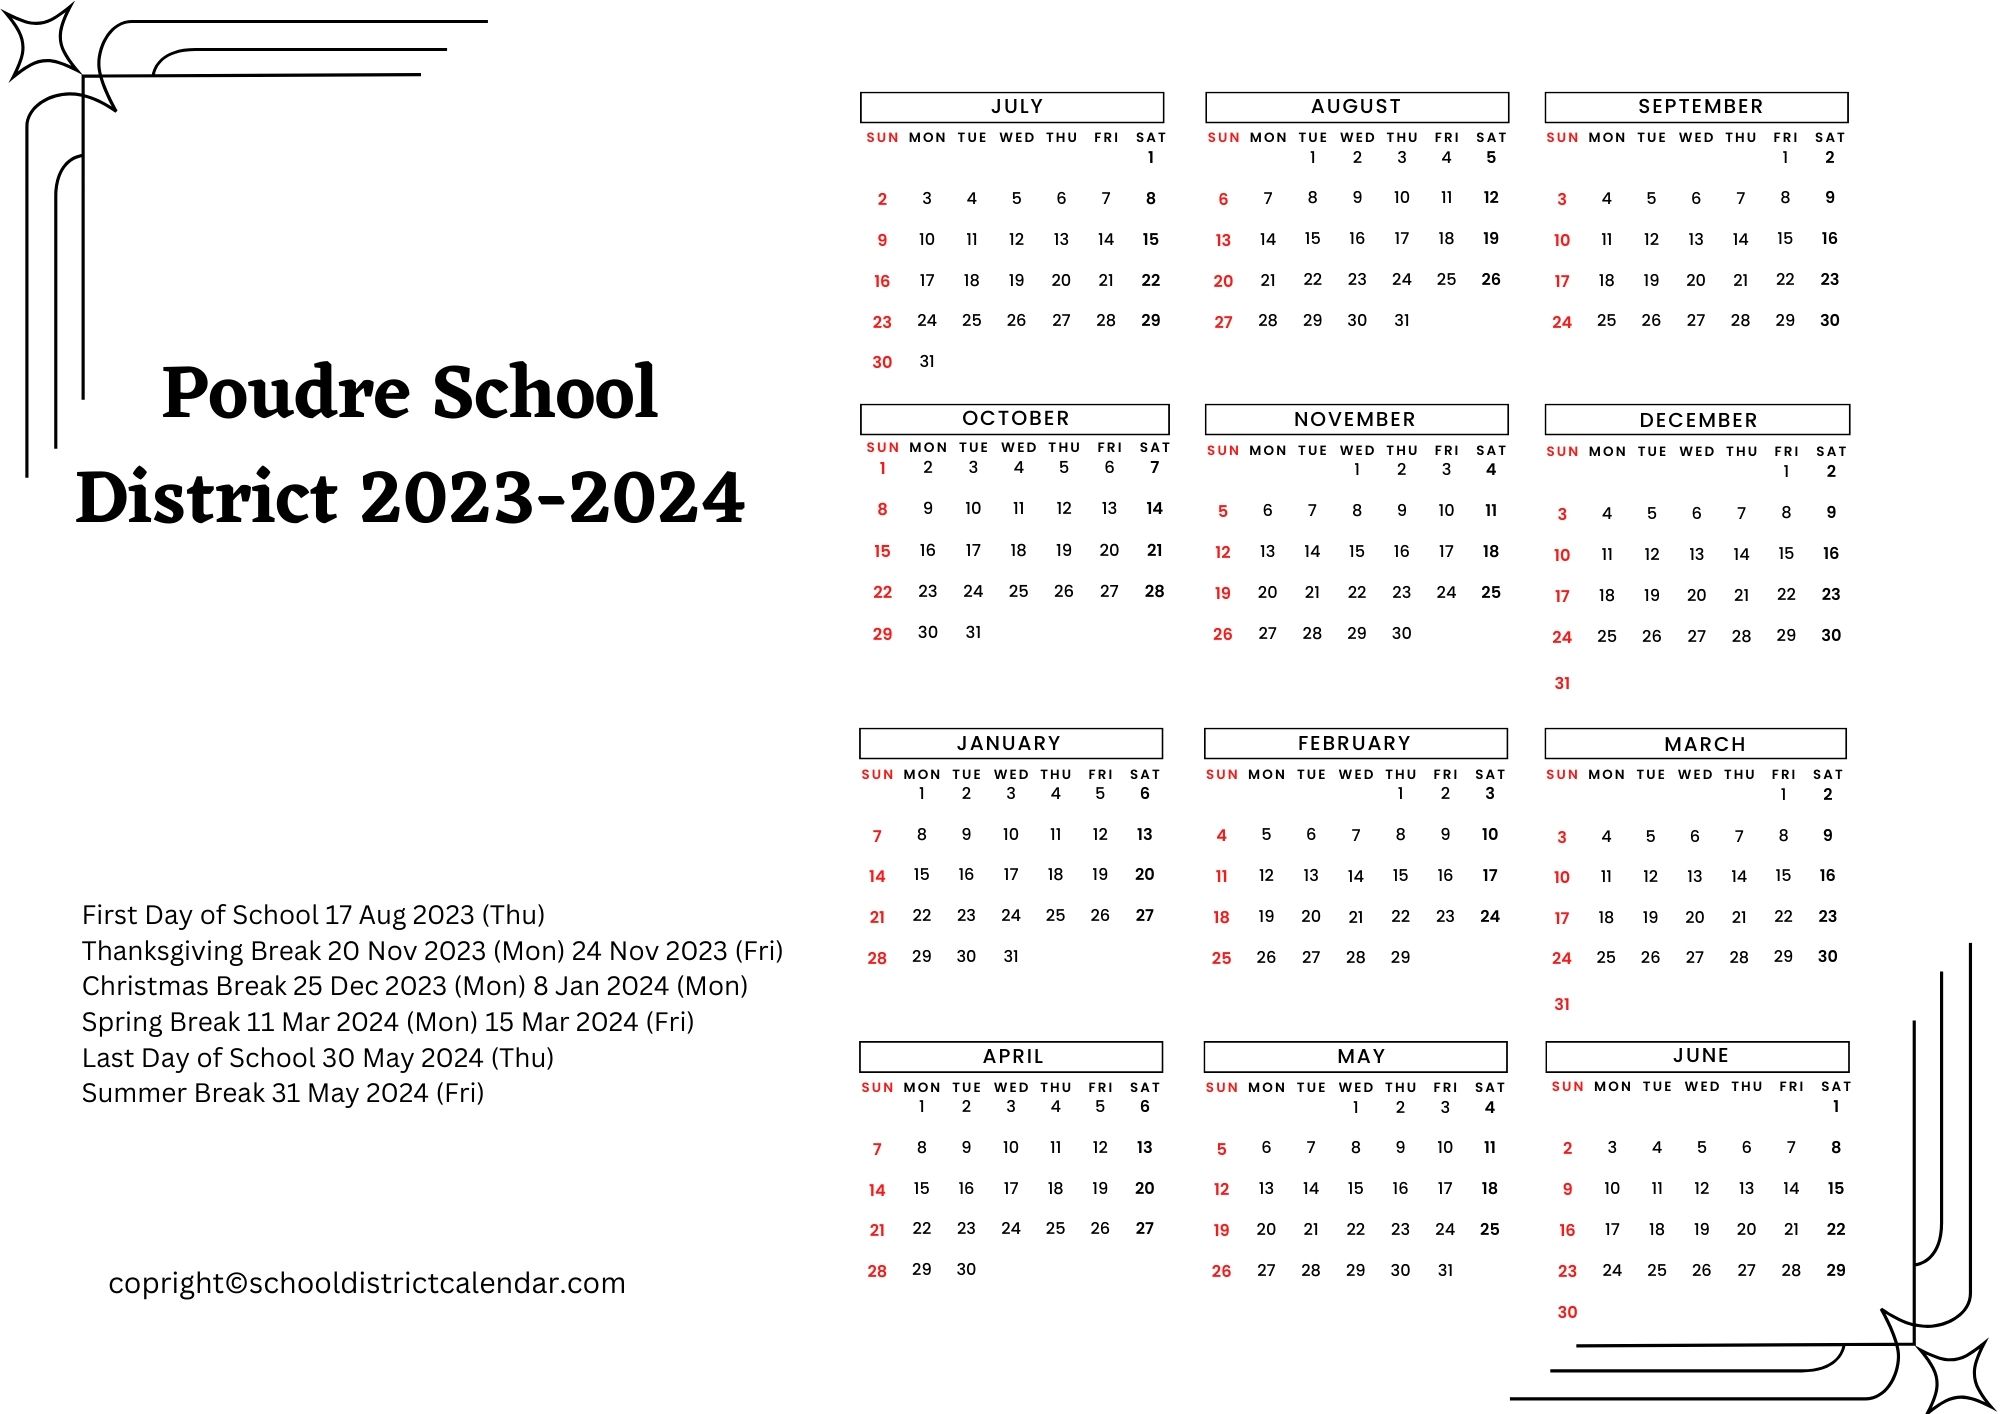 Poudre School District Calendar Holidays 2023 2024